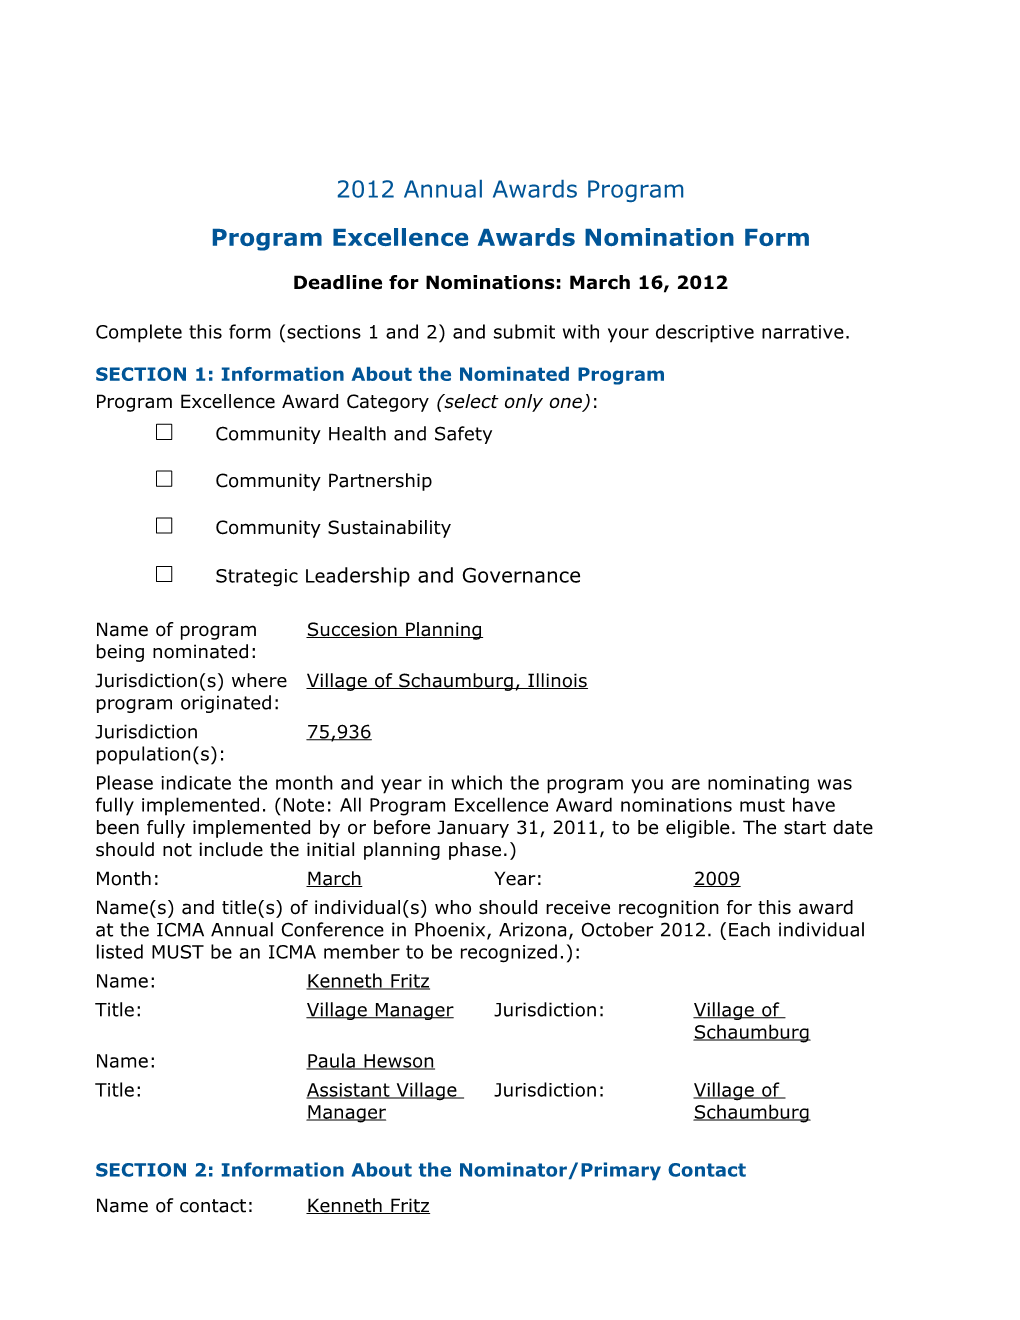 Program Excellence Awards Nomination Form